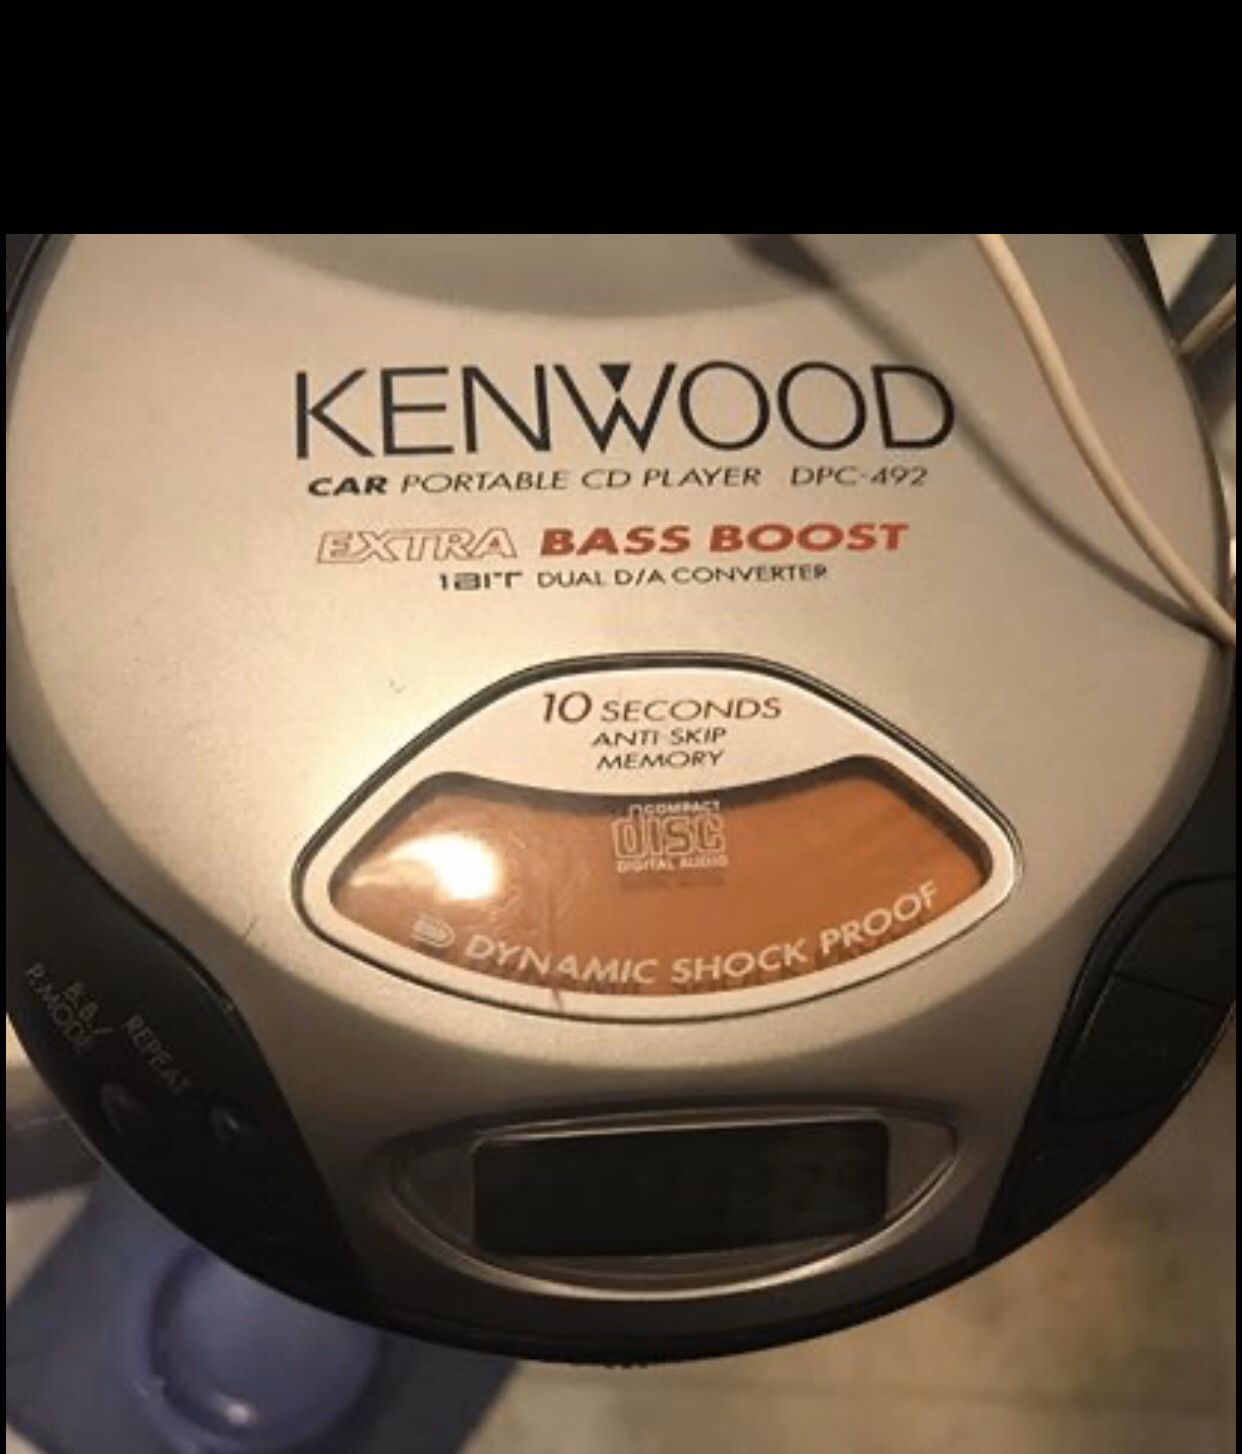 Kenwood Discman CD player portable